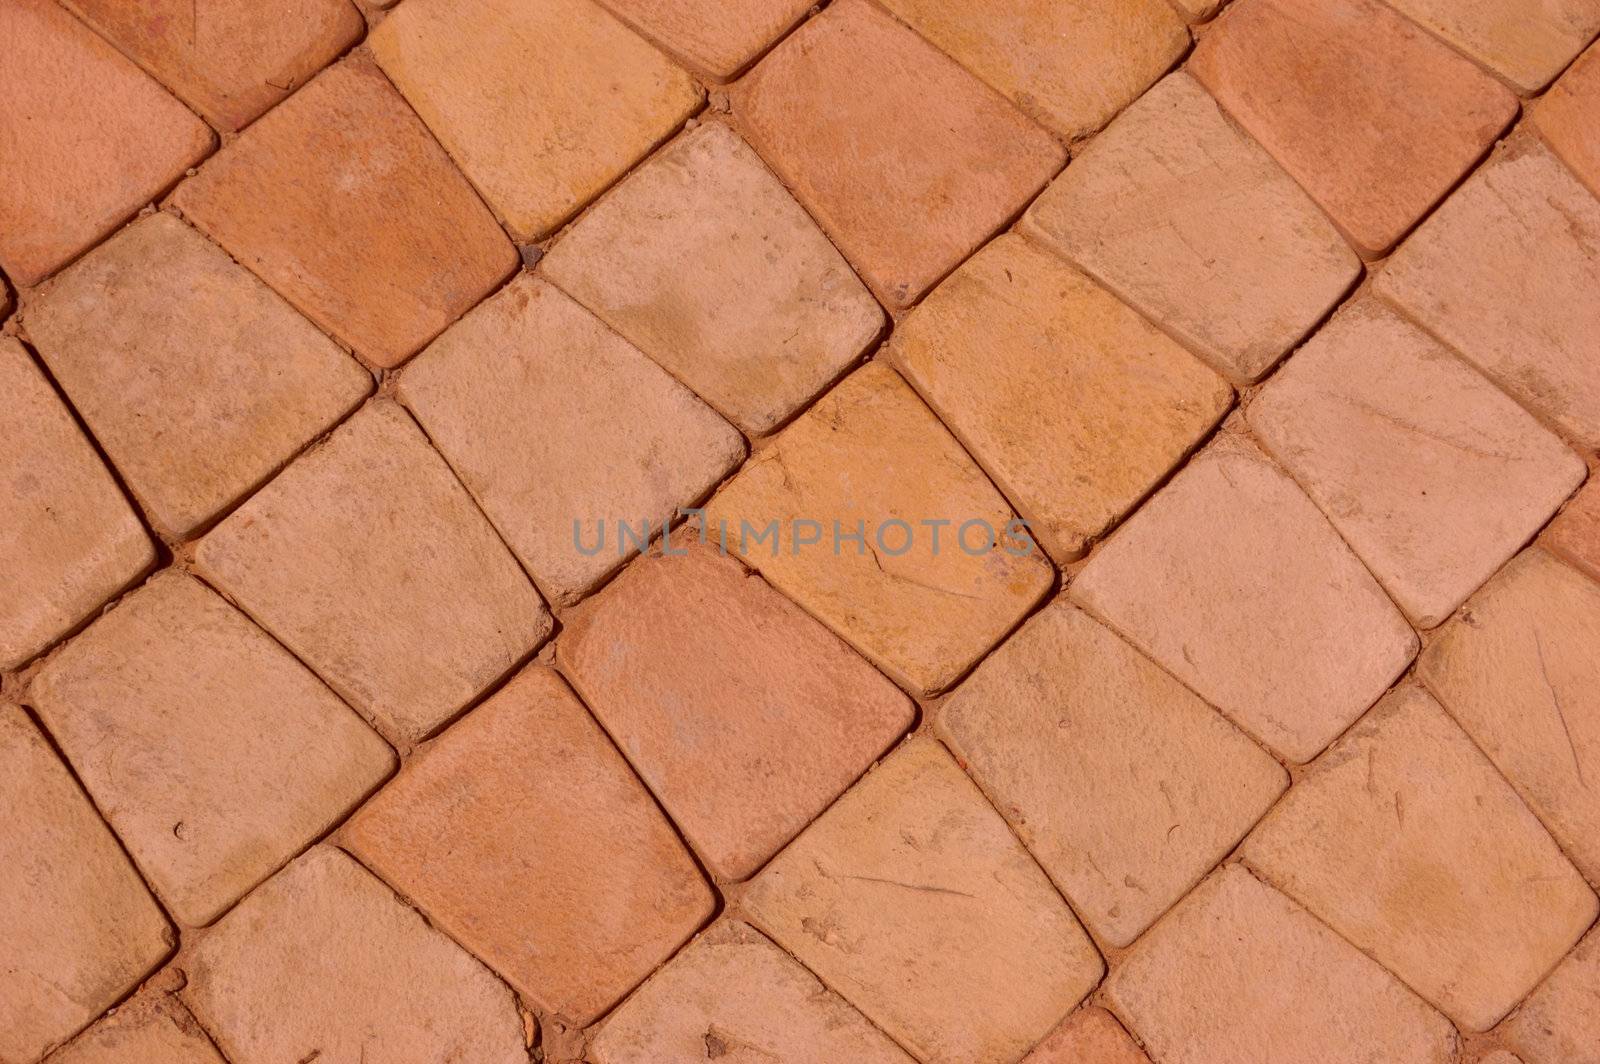 close-up of new pavement of stoneblocks (bricks) of warm color